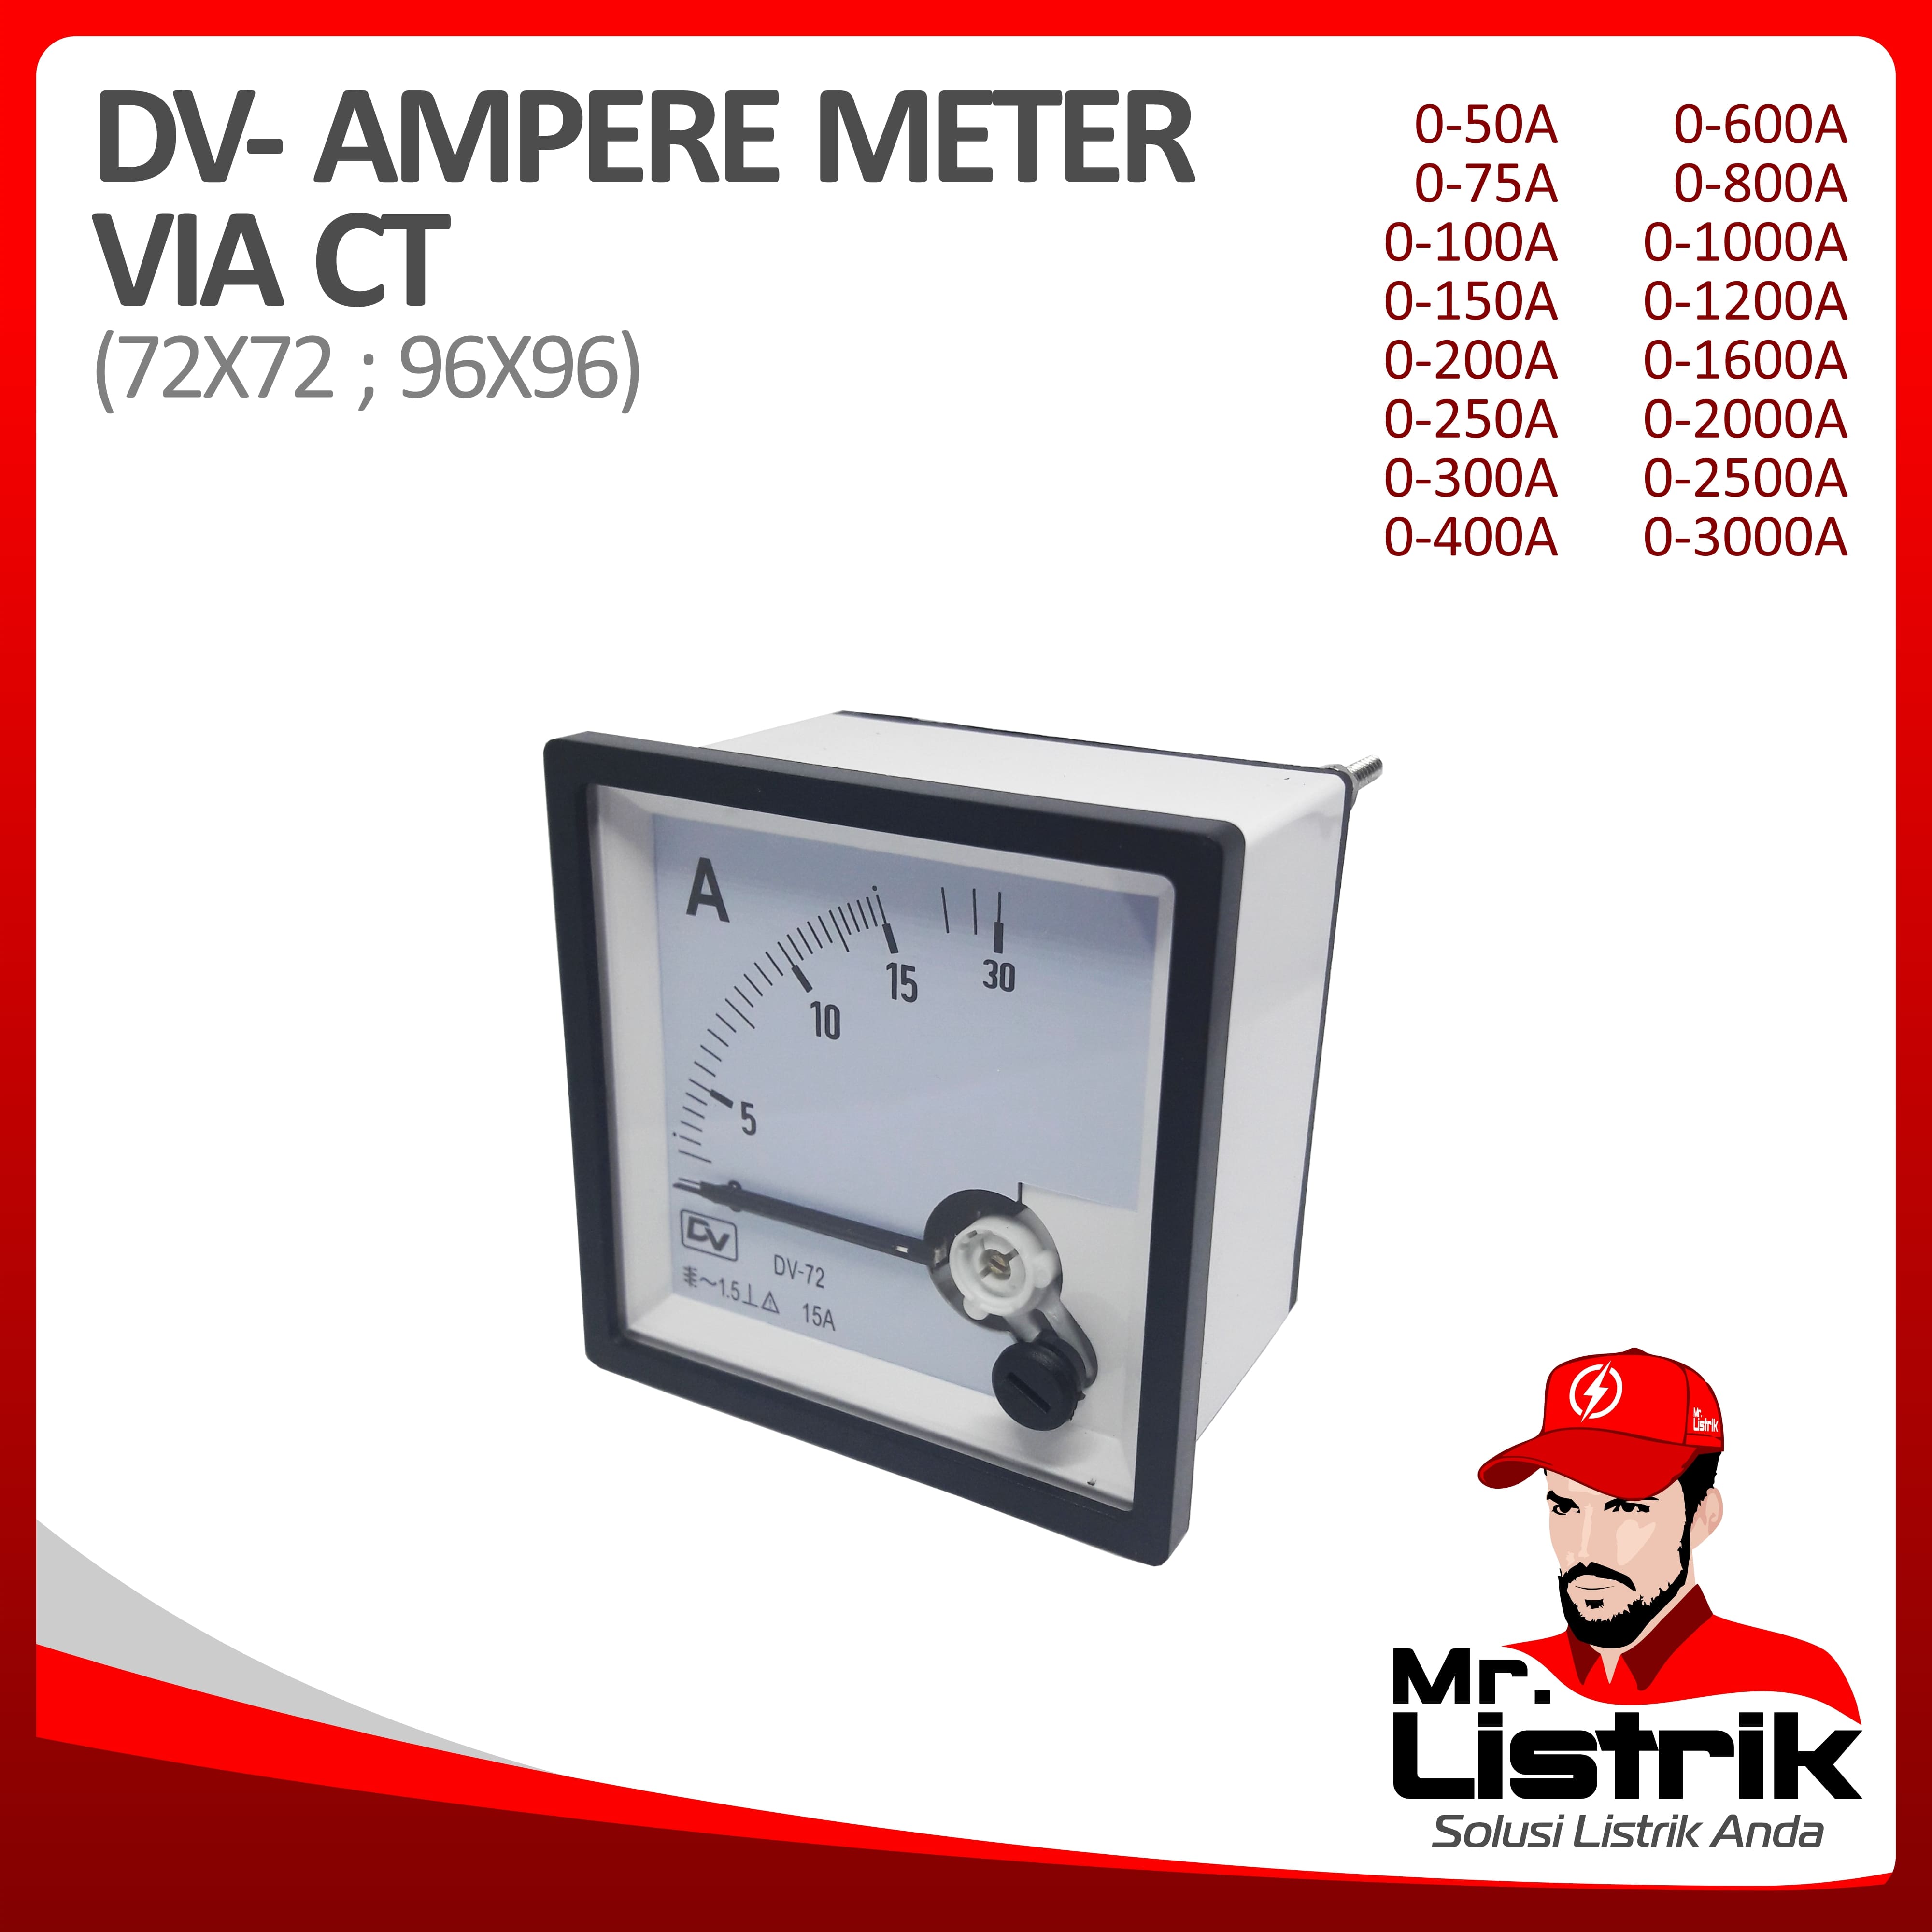 Amperemeter Via CT DV 96x96 - 300A